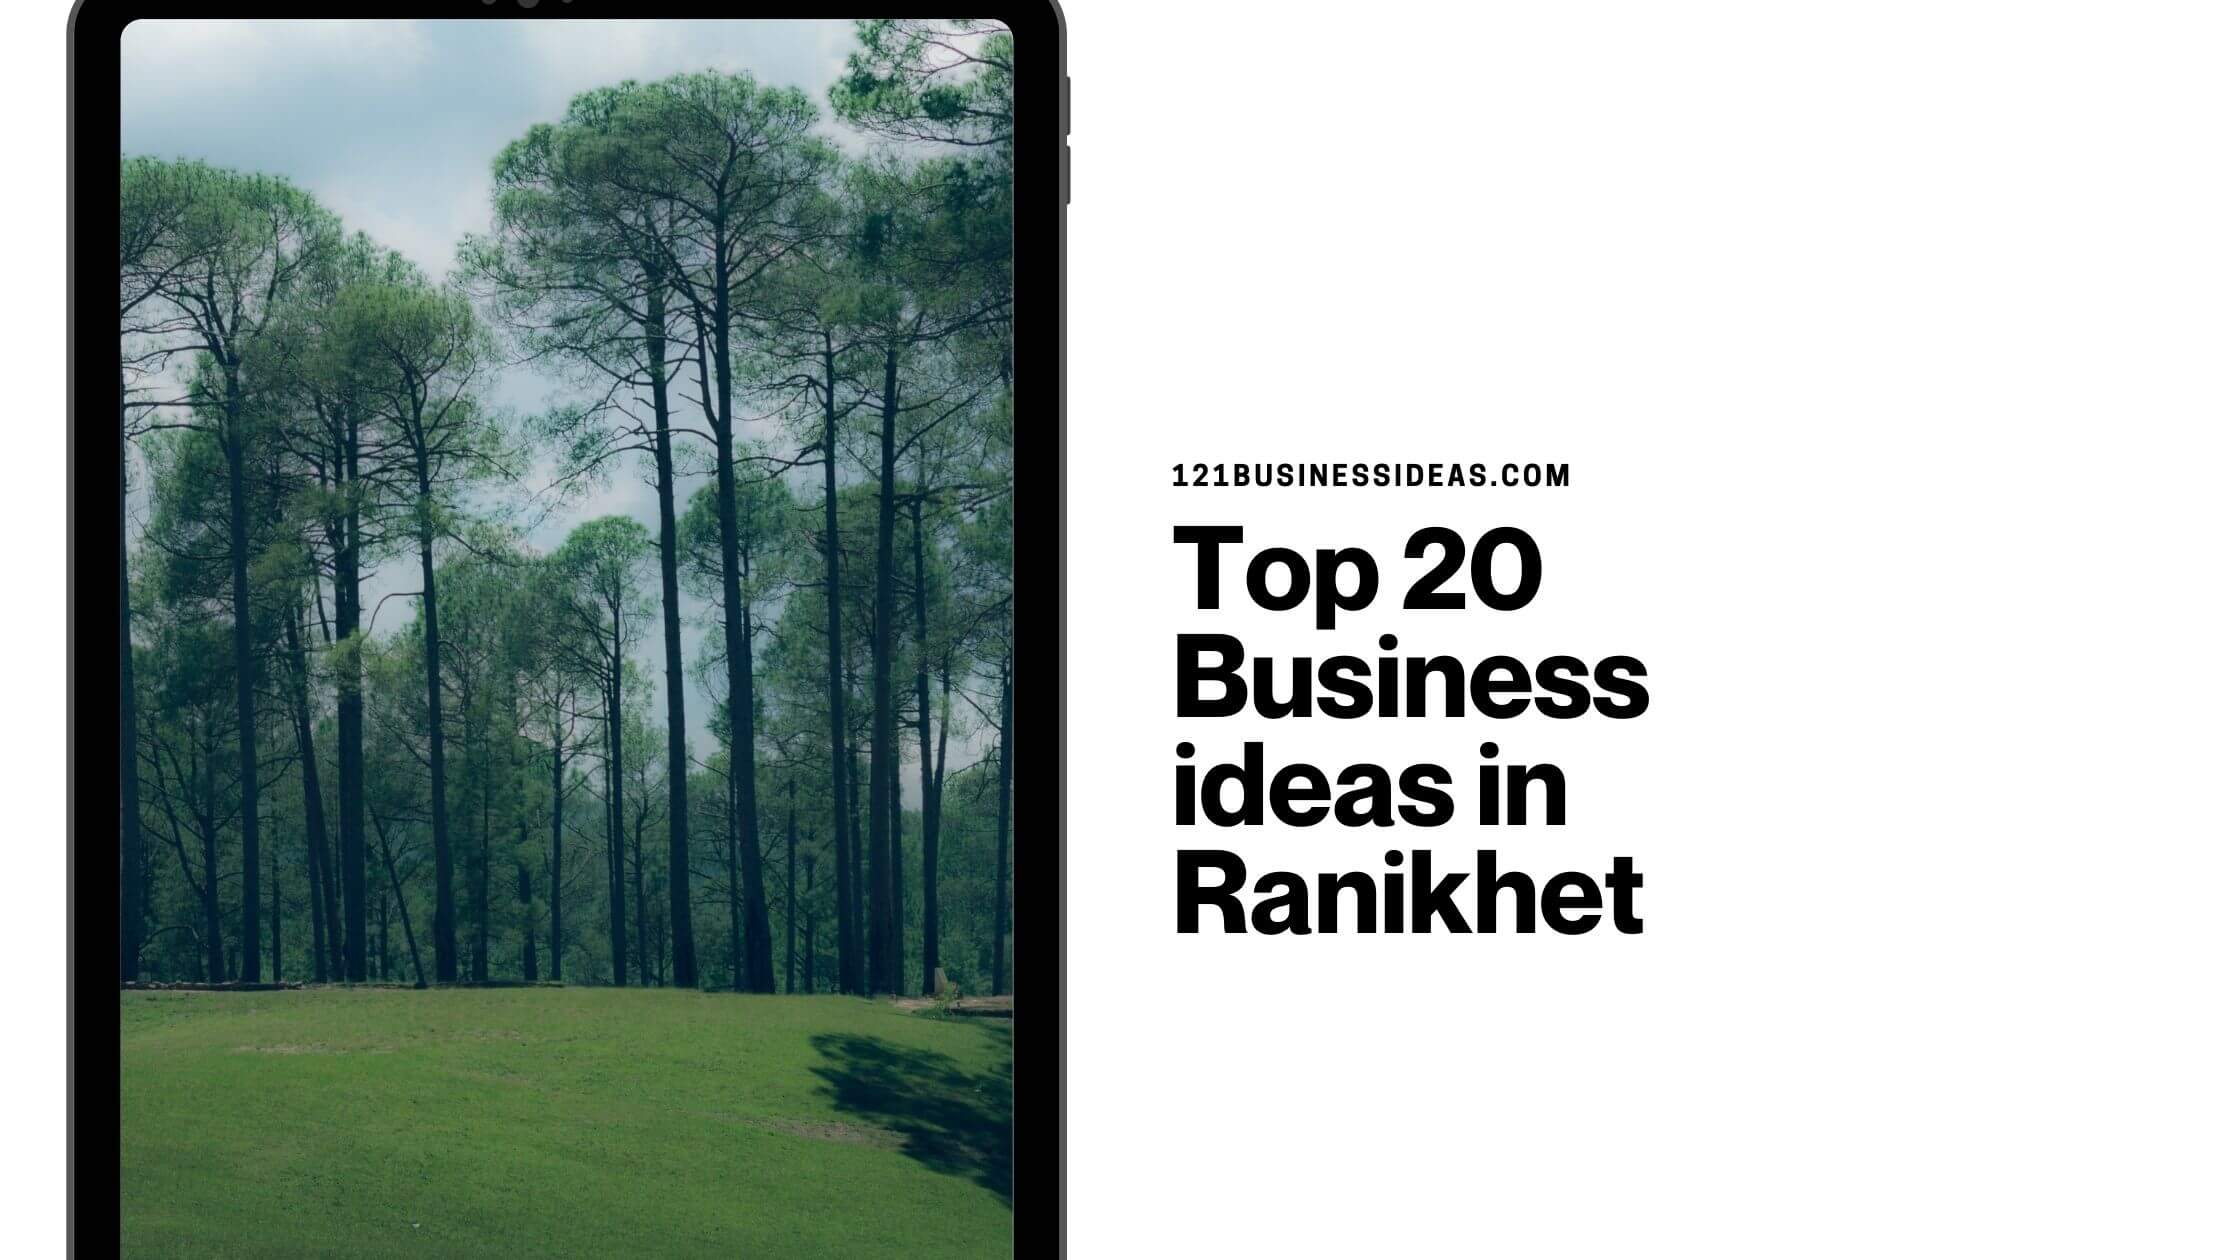 Top 20 Business ideas in Ranikhet (1)